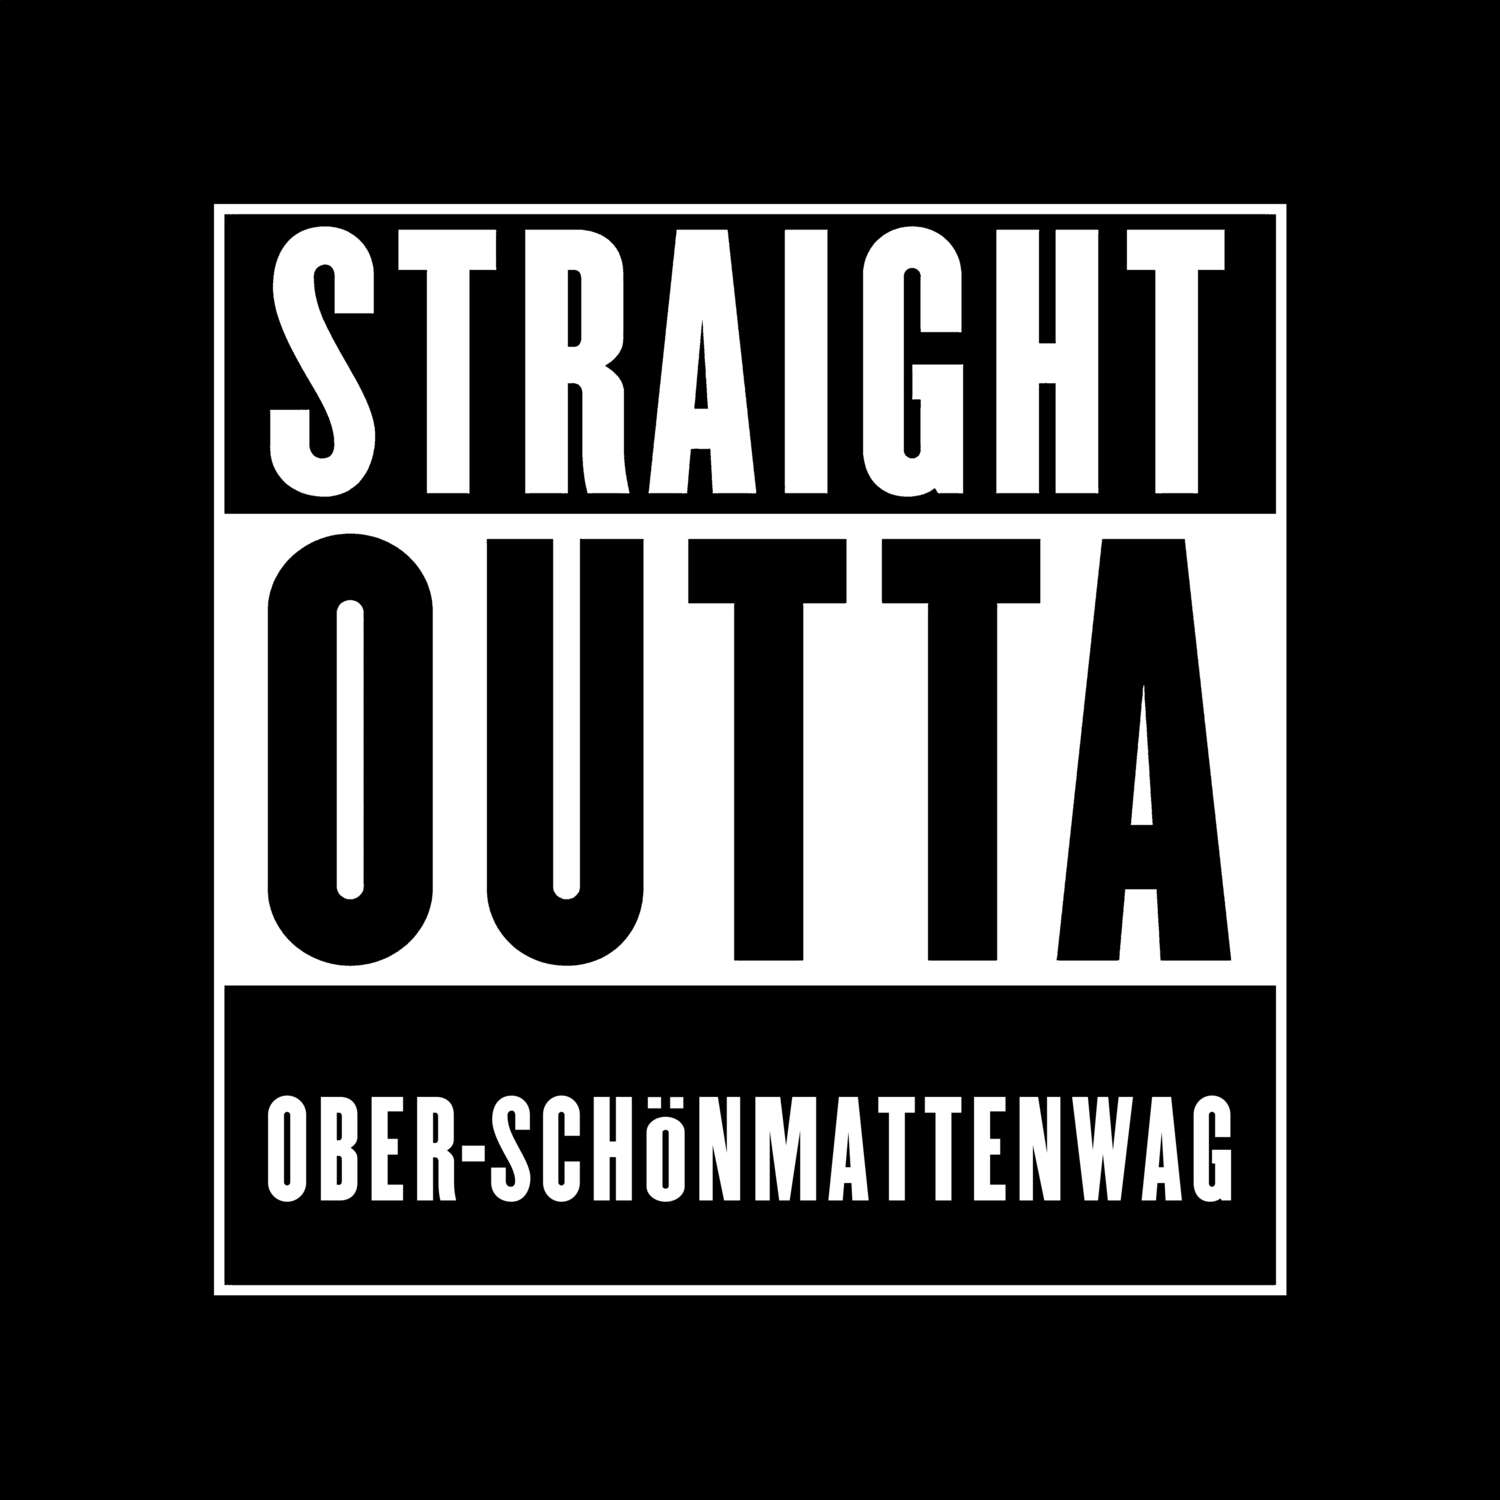 Ober-Schönmattenwag T-Shirt »Straight Outta«